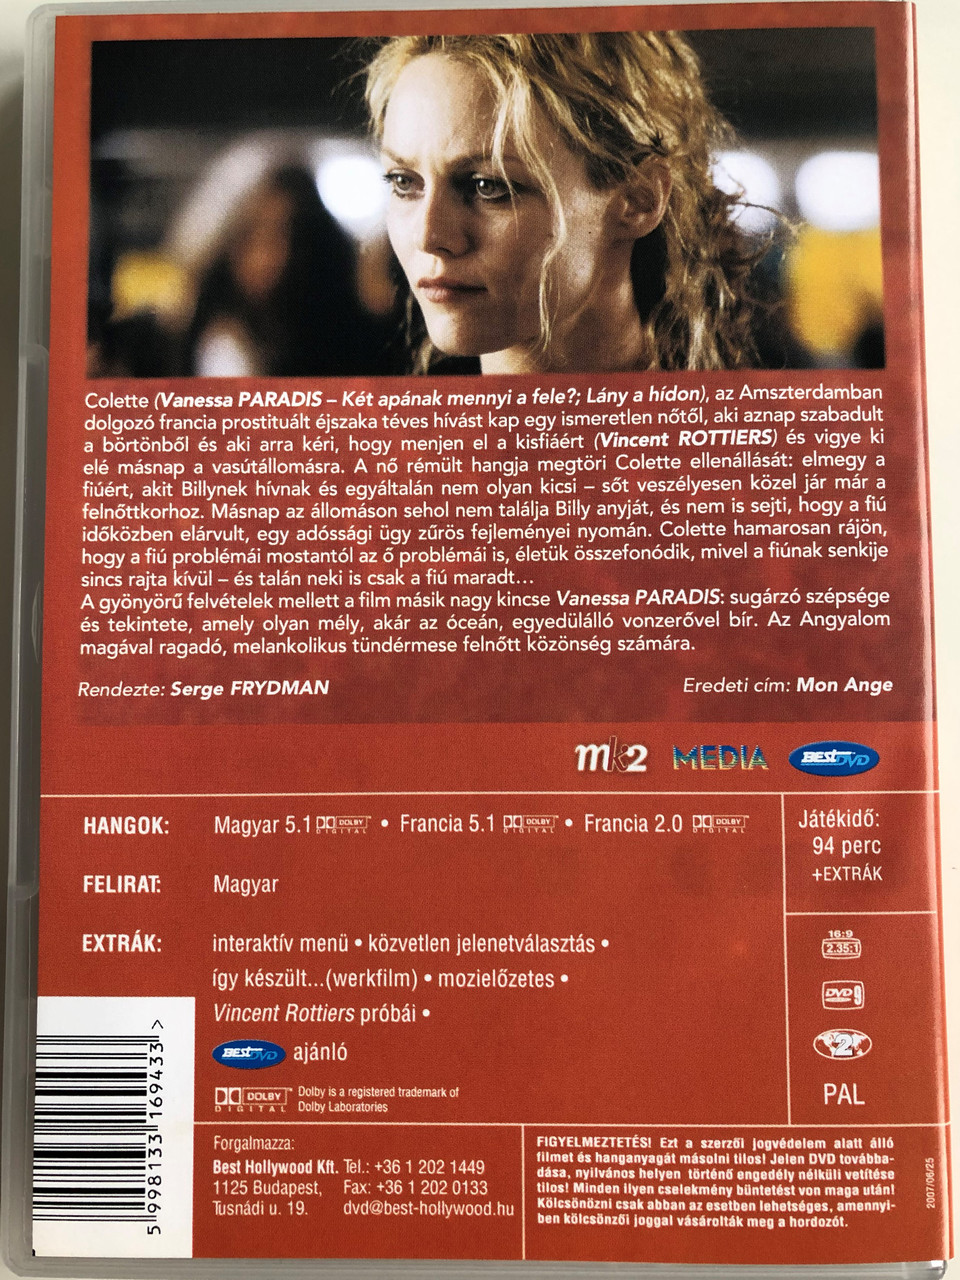 Mon Ange (My Angel) DVD 2004 Őrangyal / Directed by Serge Frydman /  Starring: Vanessa Paradis, Vincent Rottiers - bibleinmylanguage